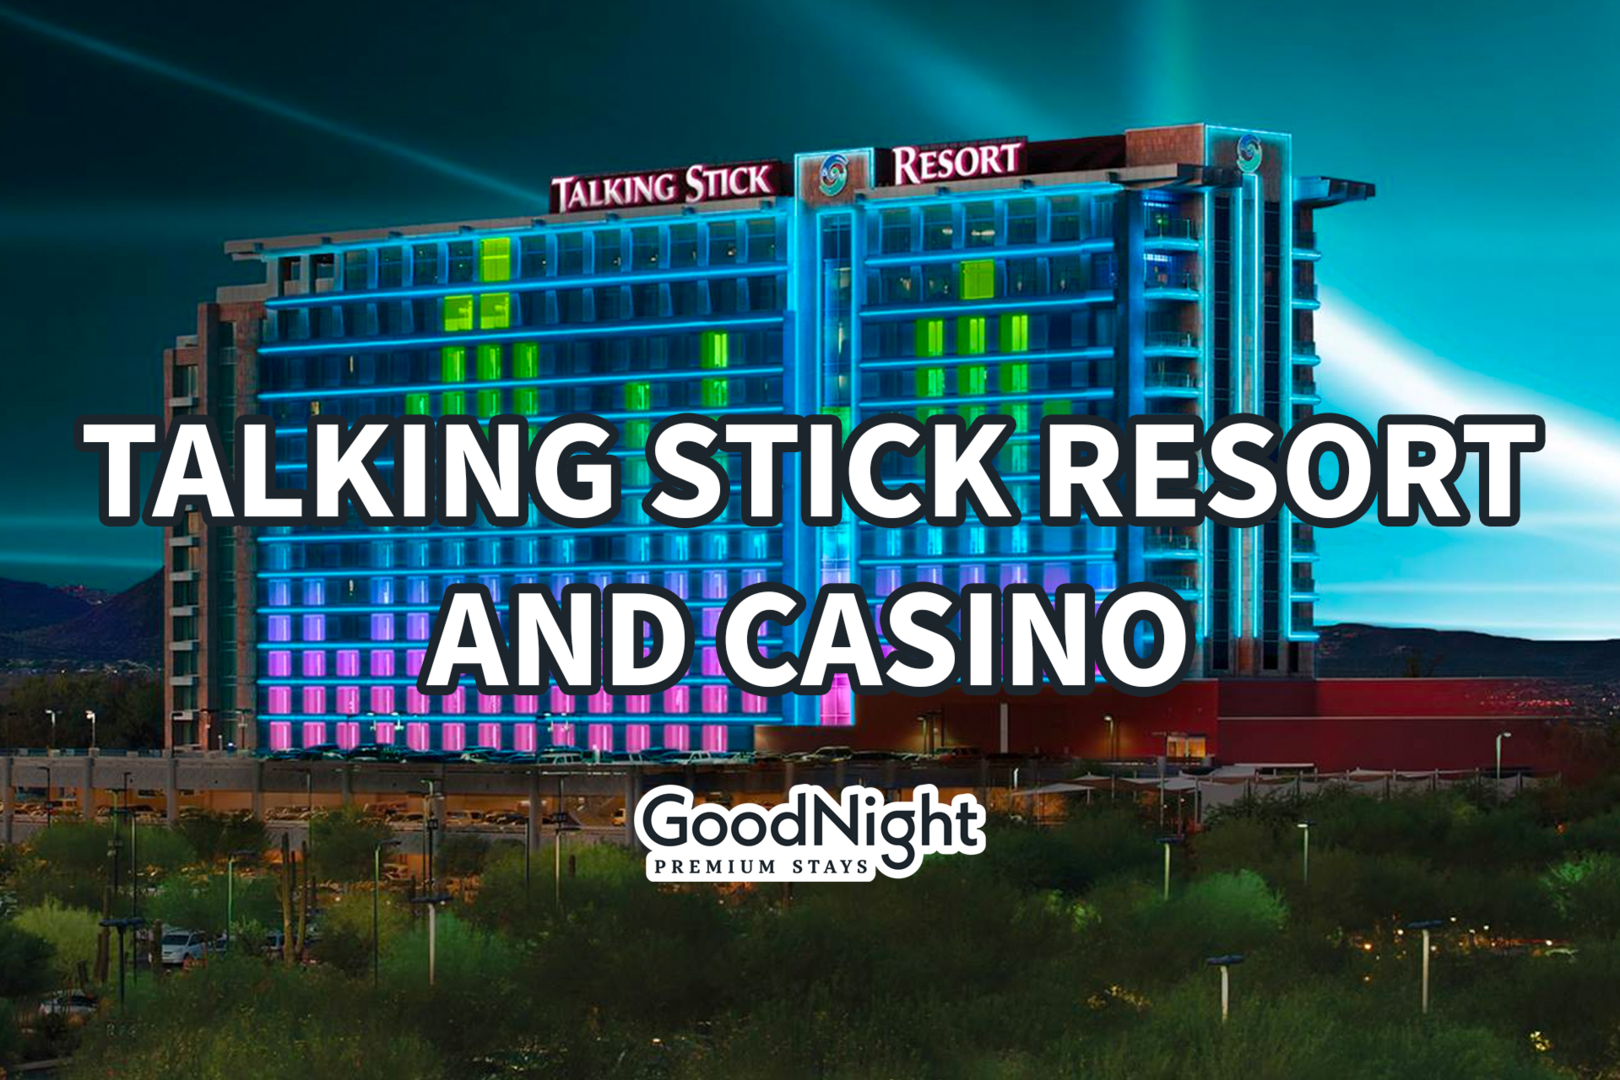 18 mins: Talking Stick Resort and Casino